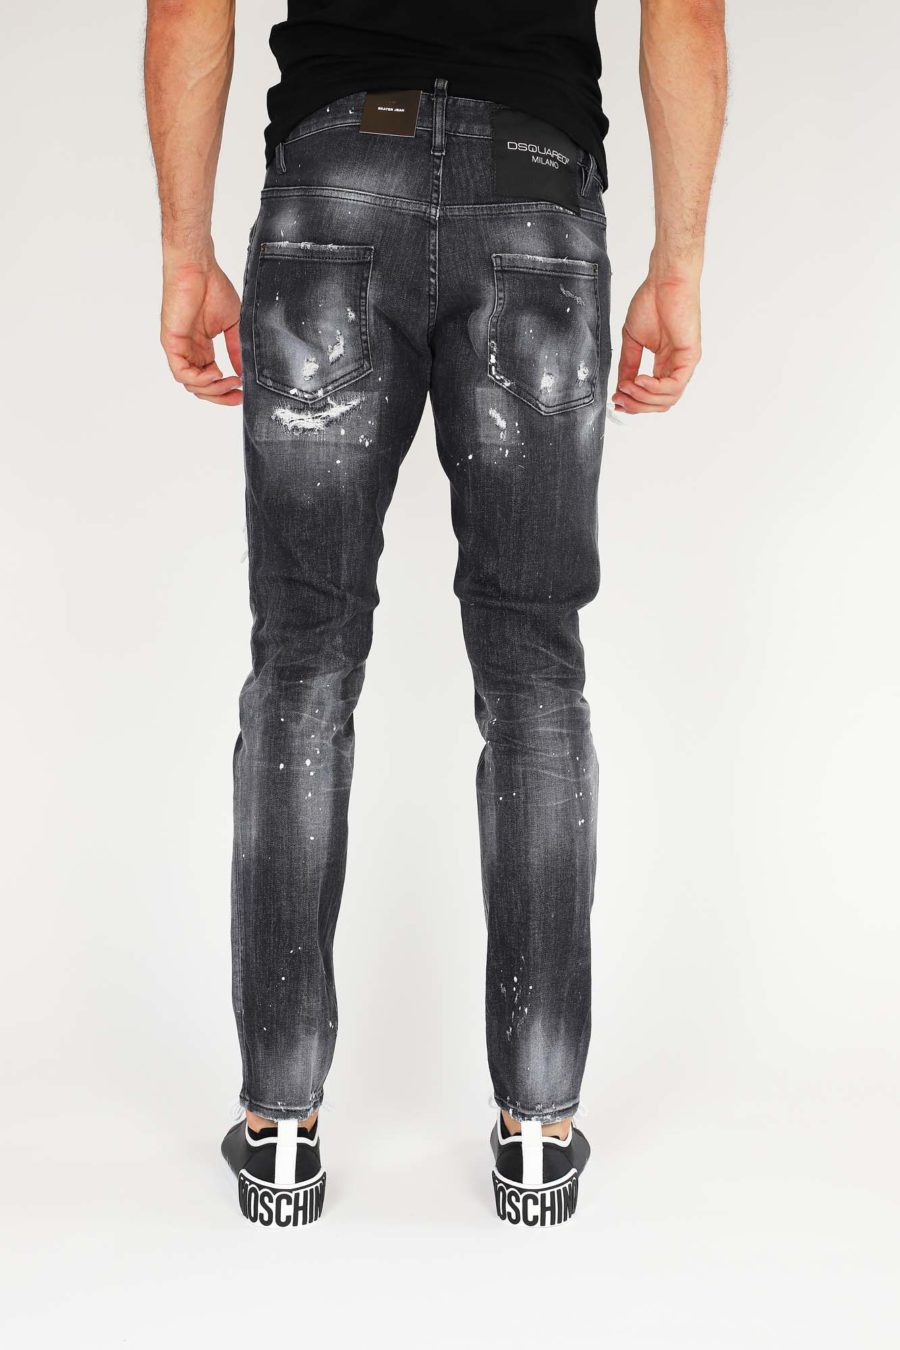 Pantalon skater en jean noir milano avec fermeture éclair - IMG 9846